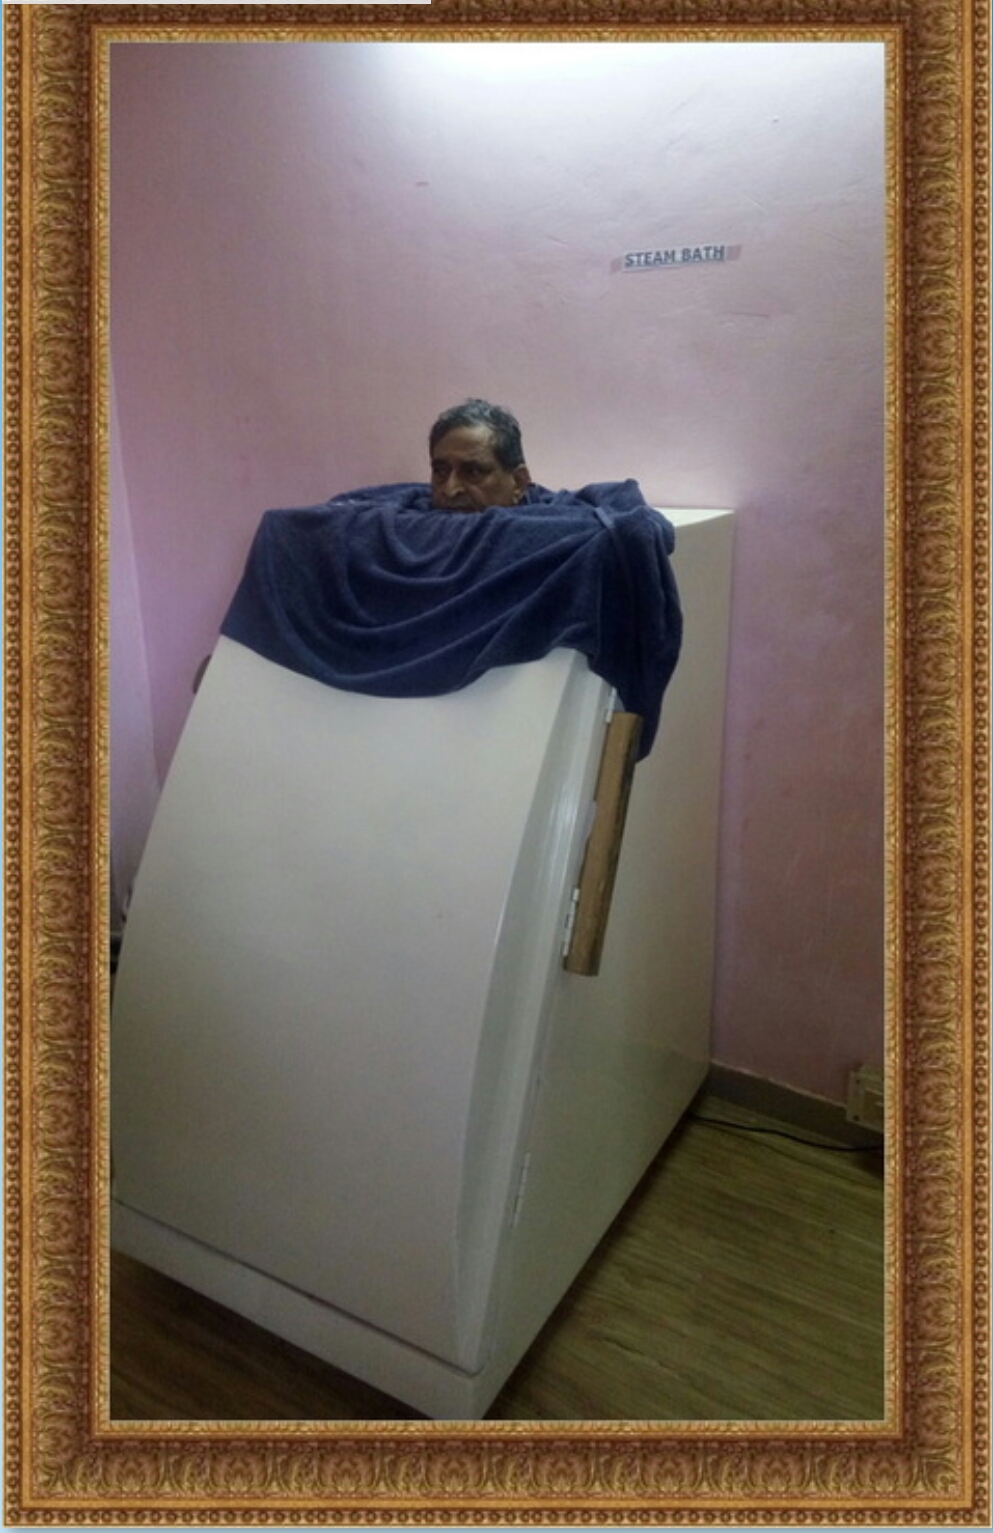 MP Rajyasabha, Senior BJP Leader, Maanneey Sri RK Sinha ji, Taking Steam Bath